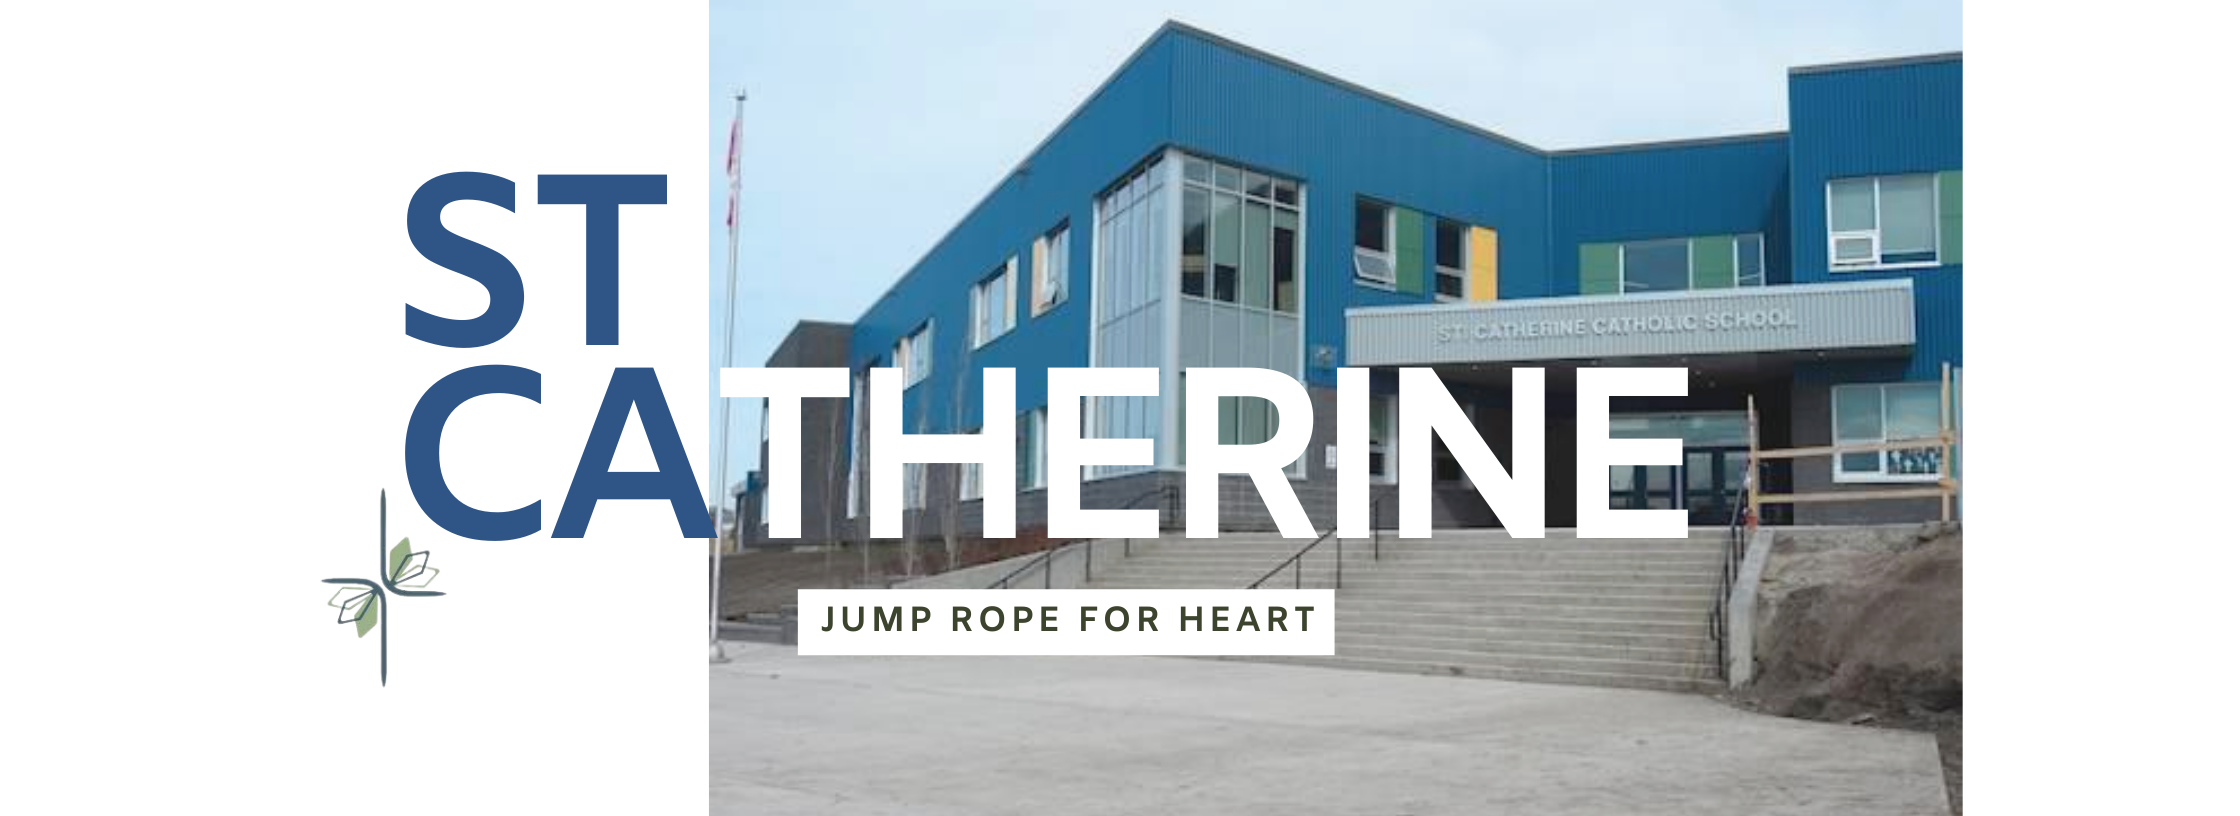 St Catherine Catholic School - Grande Prairie | Heart & Stroke Jump Rope for Heart